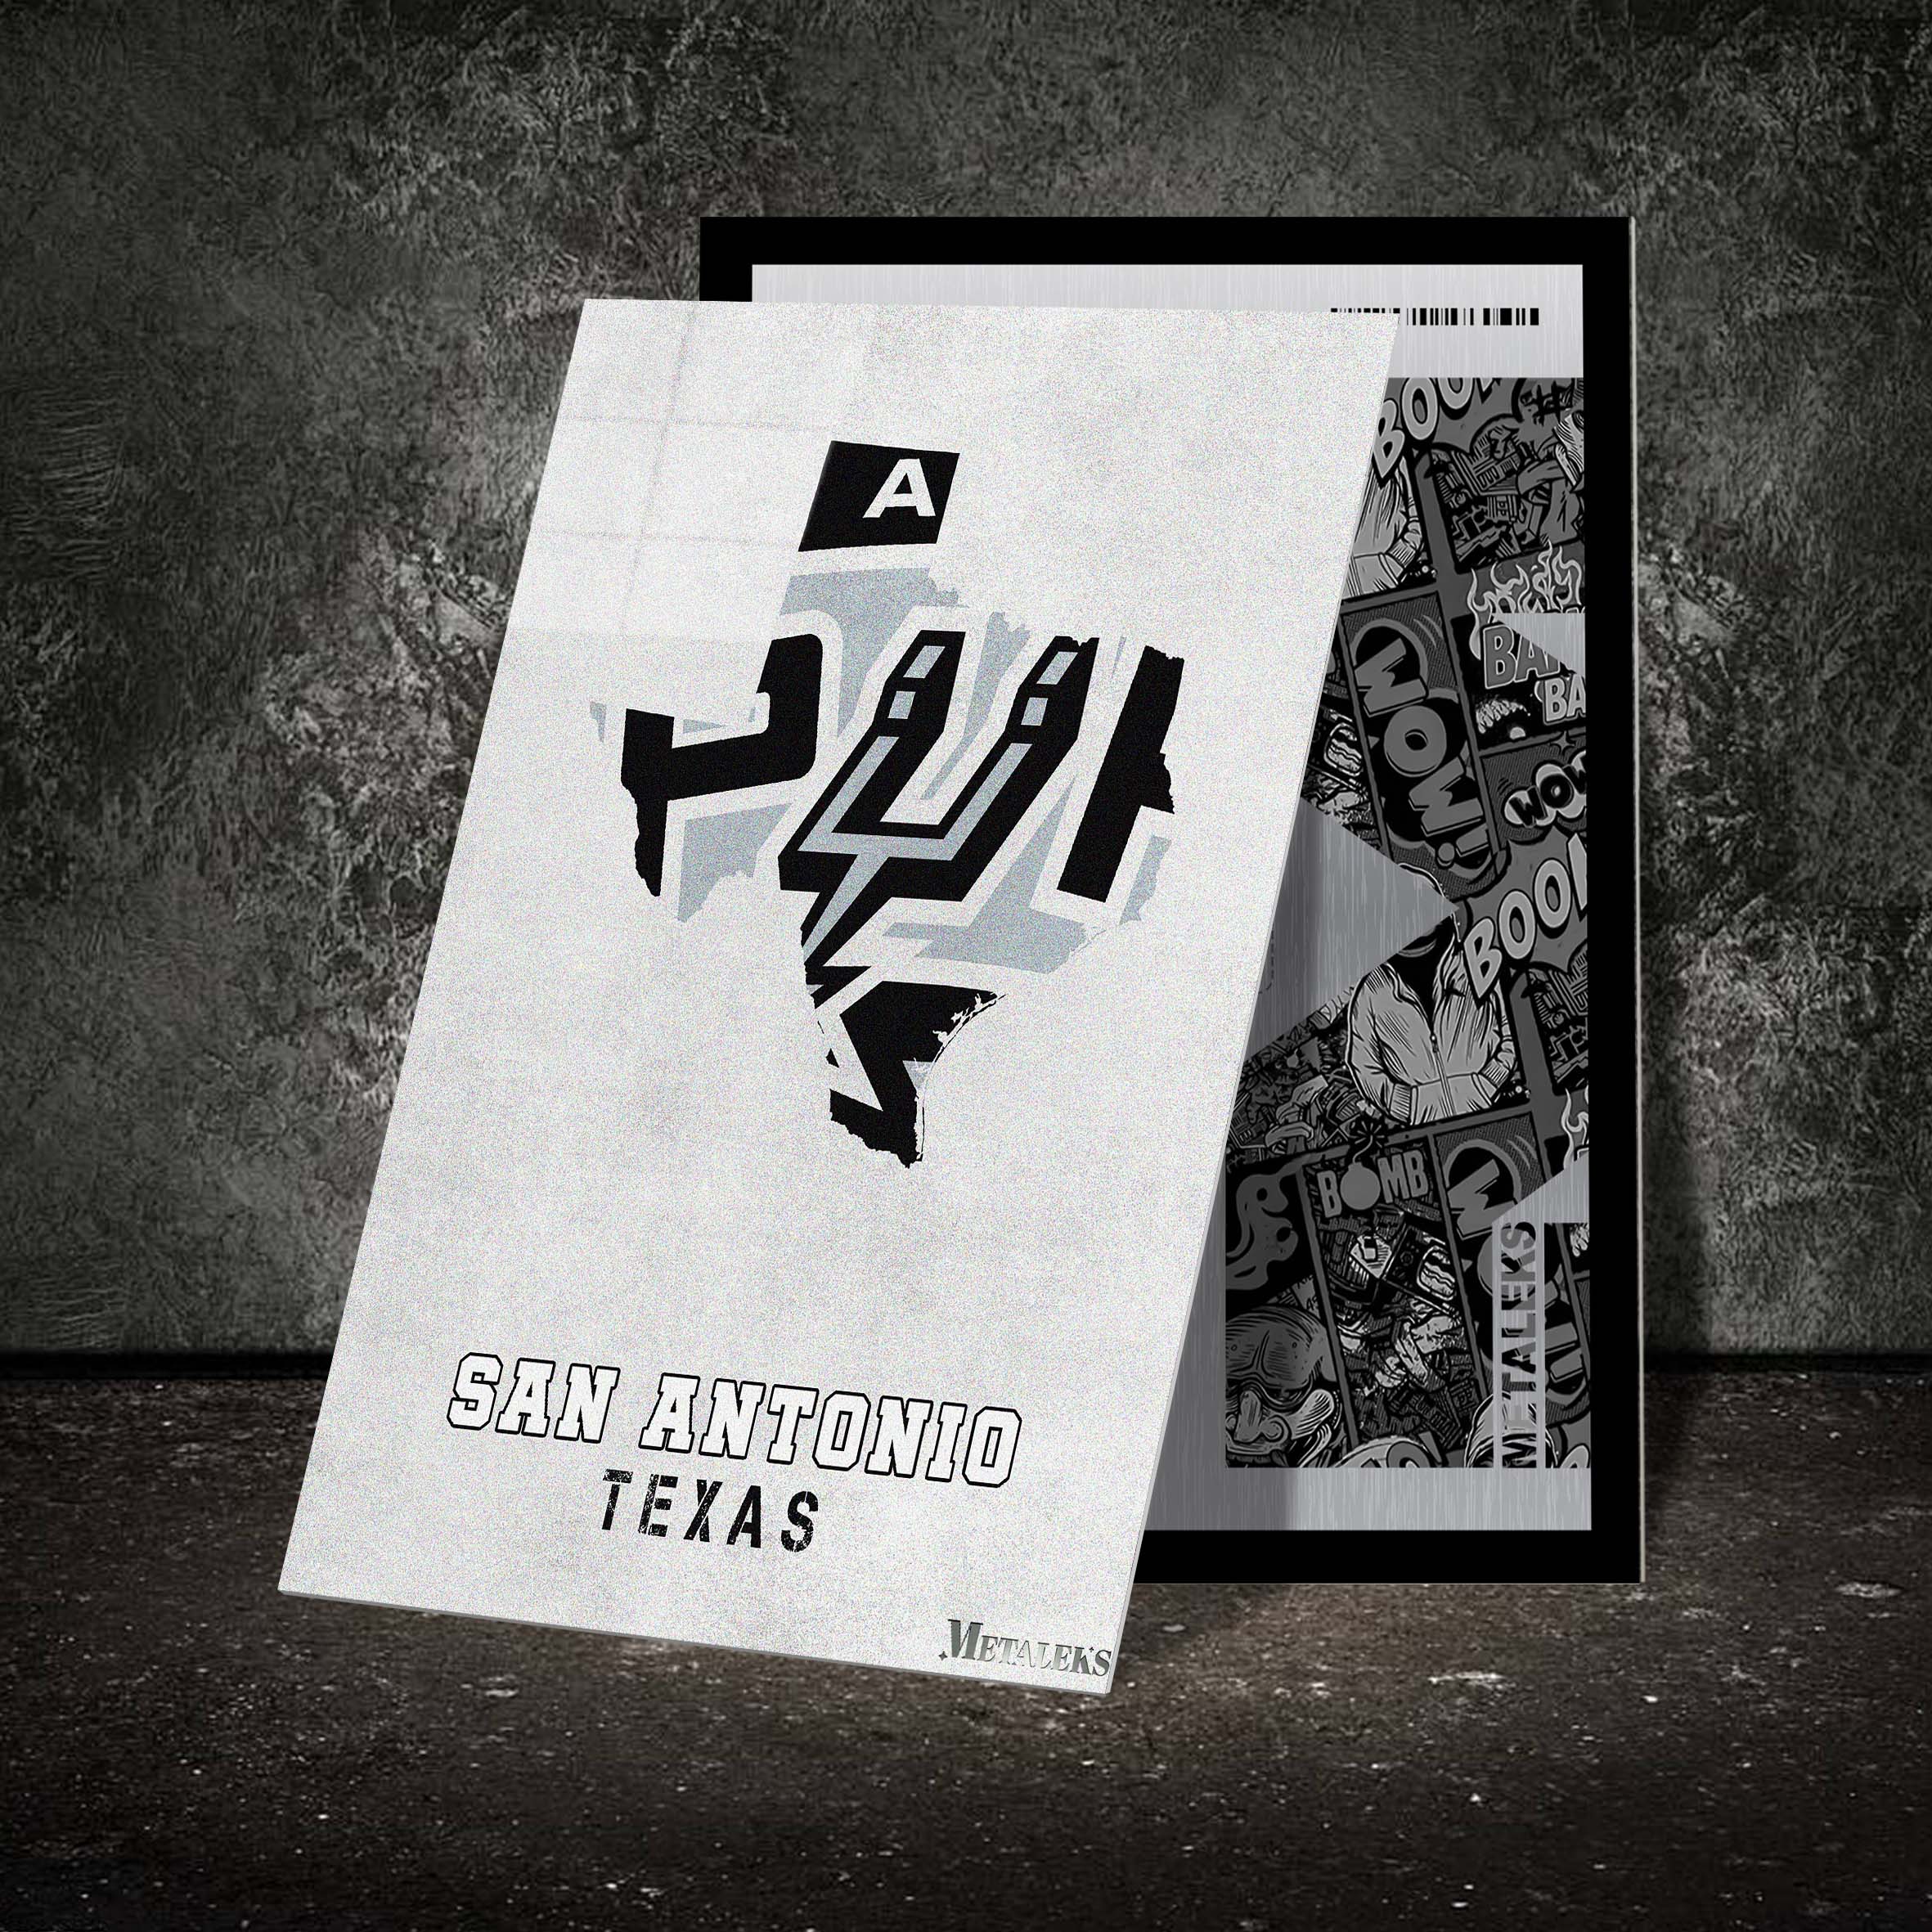 San Antonio Spurs-designed by @Hoang Van Thuan